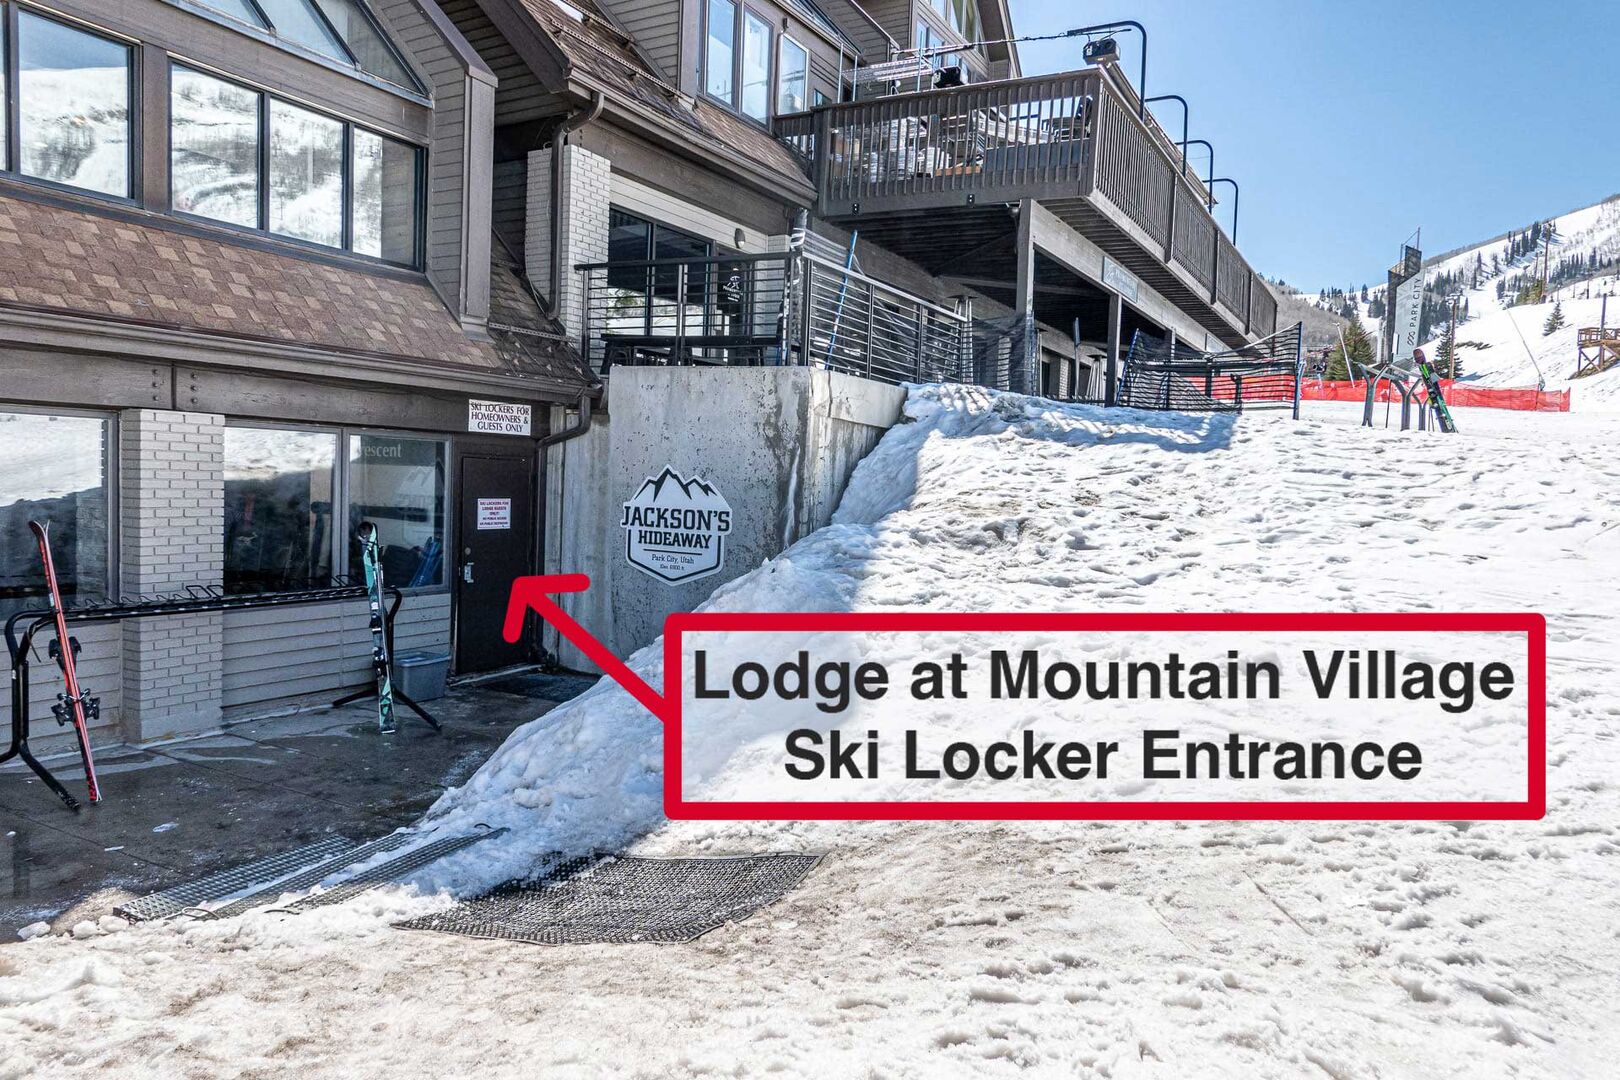 Ski locker room entrance from the slopes